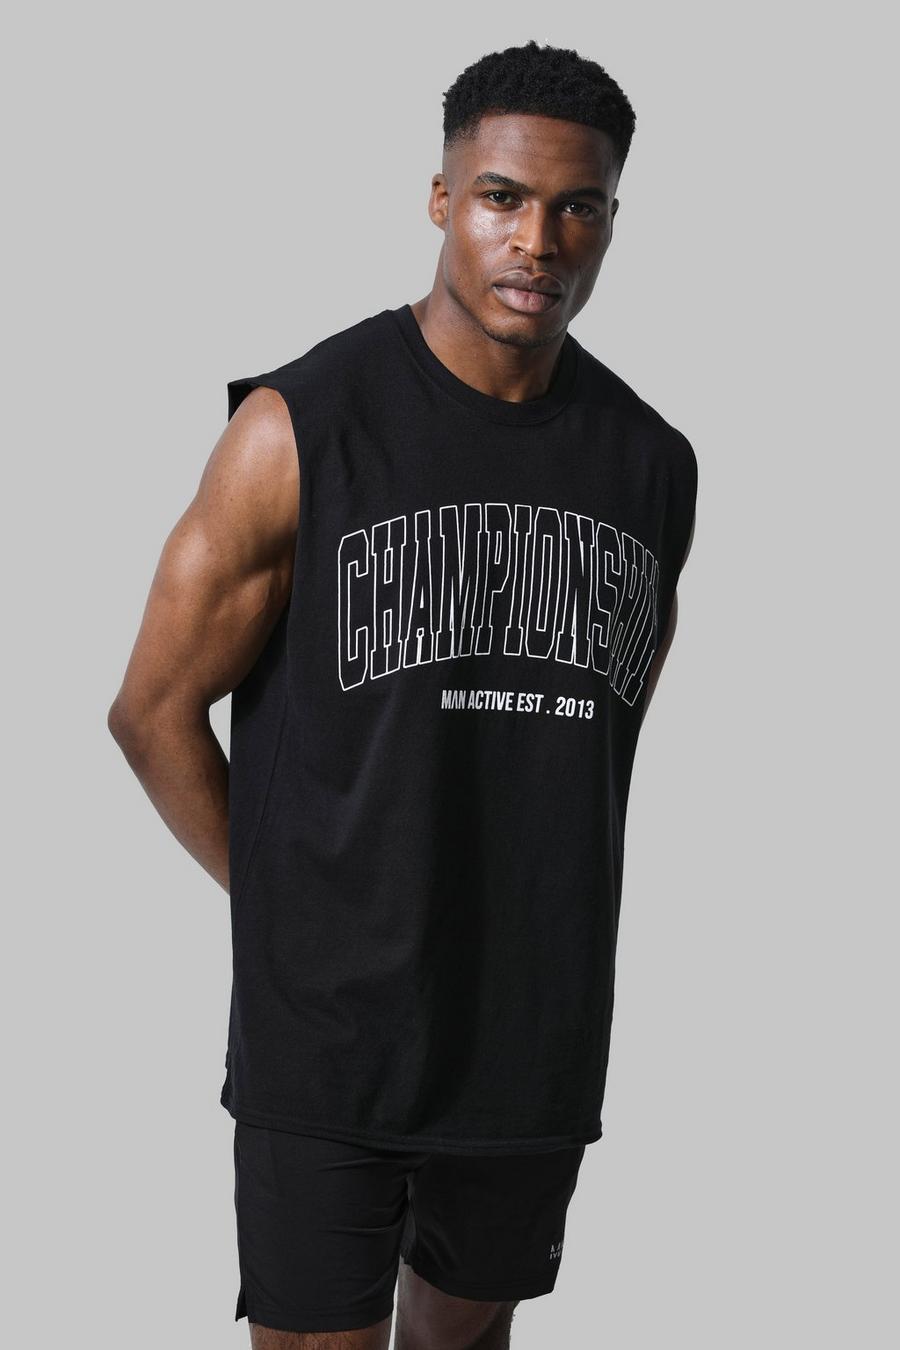 Black Man Active Fitness Championship Tank Top